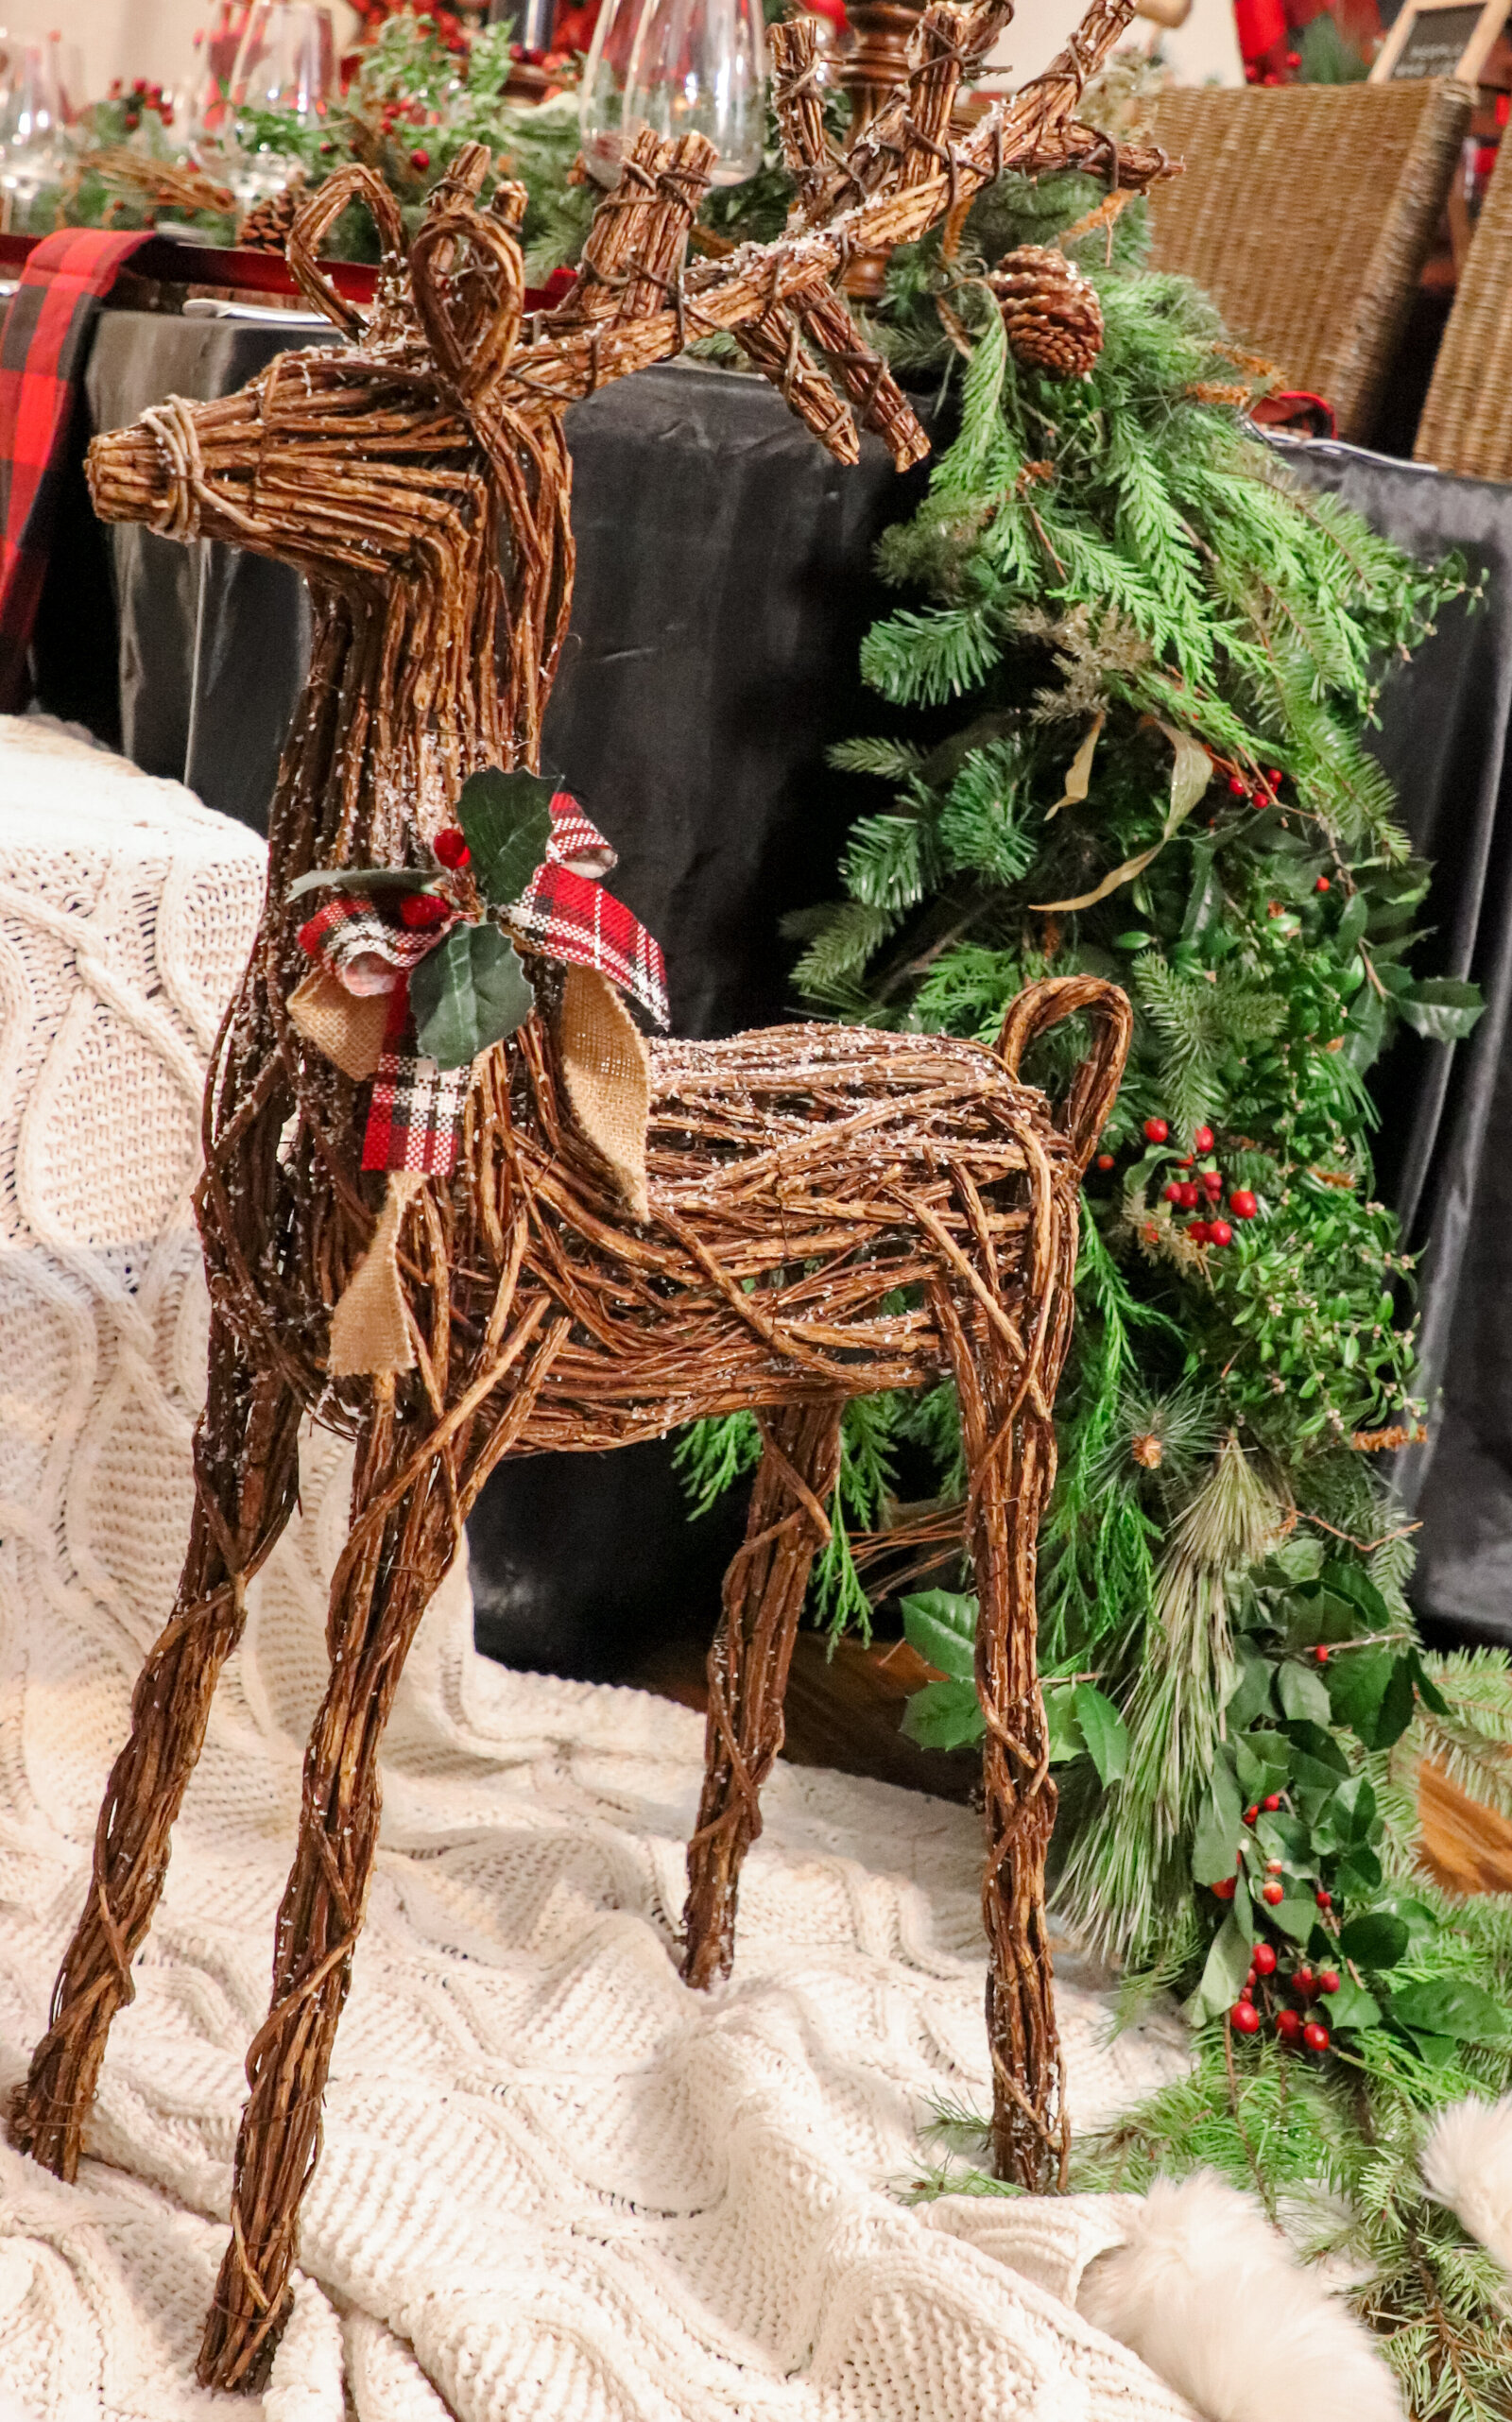 deer decoration christmas table setting event planner nyc buffalo plaid theme (1)